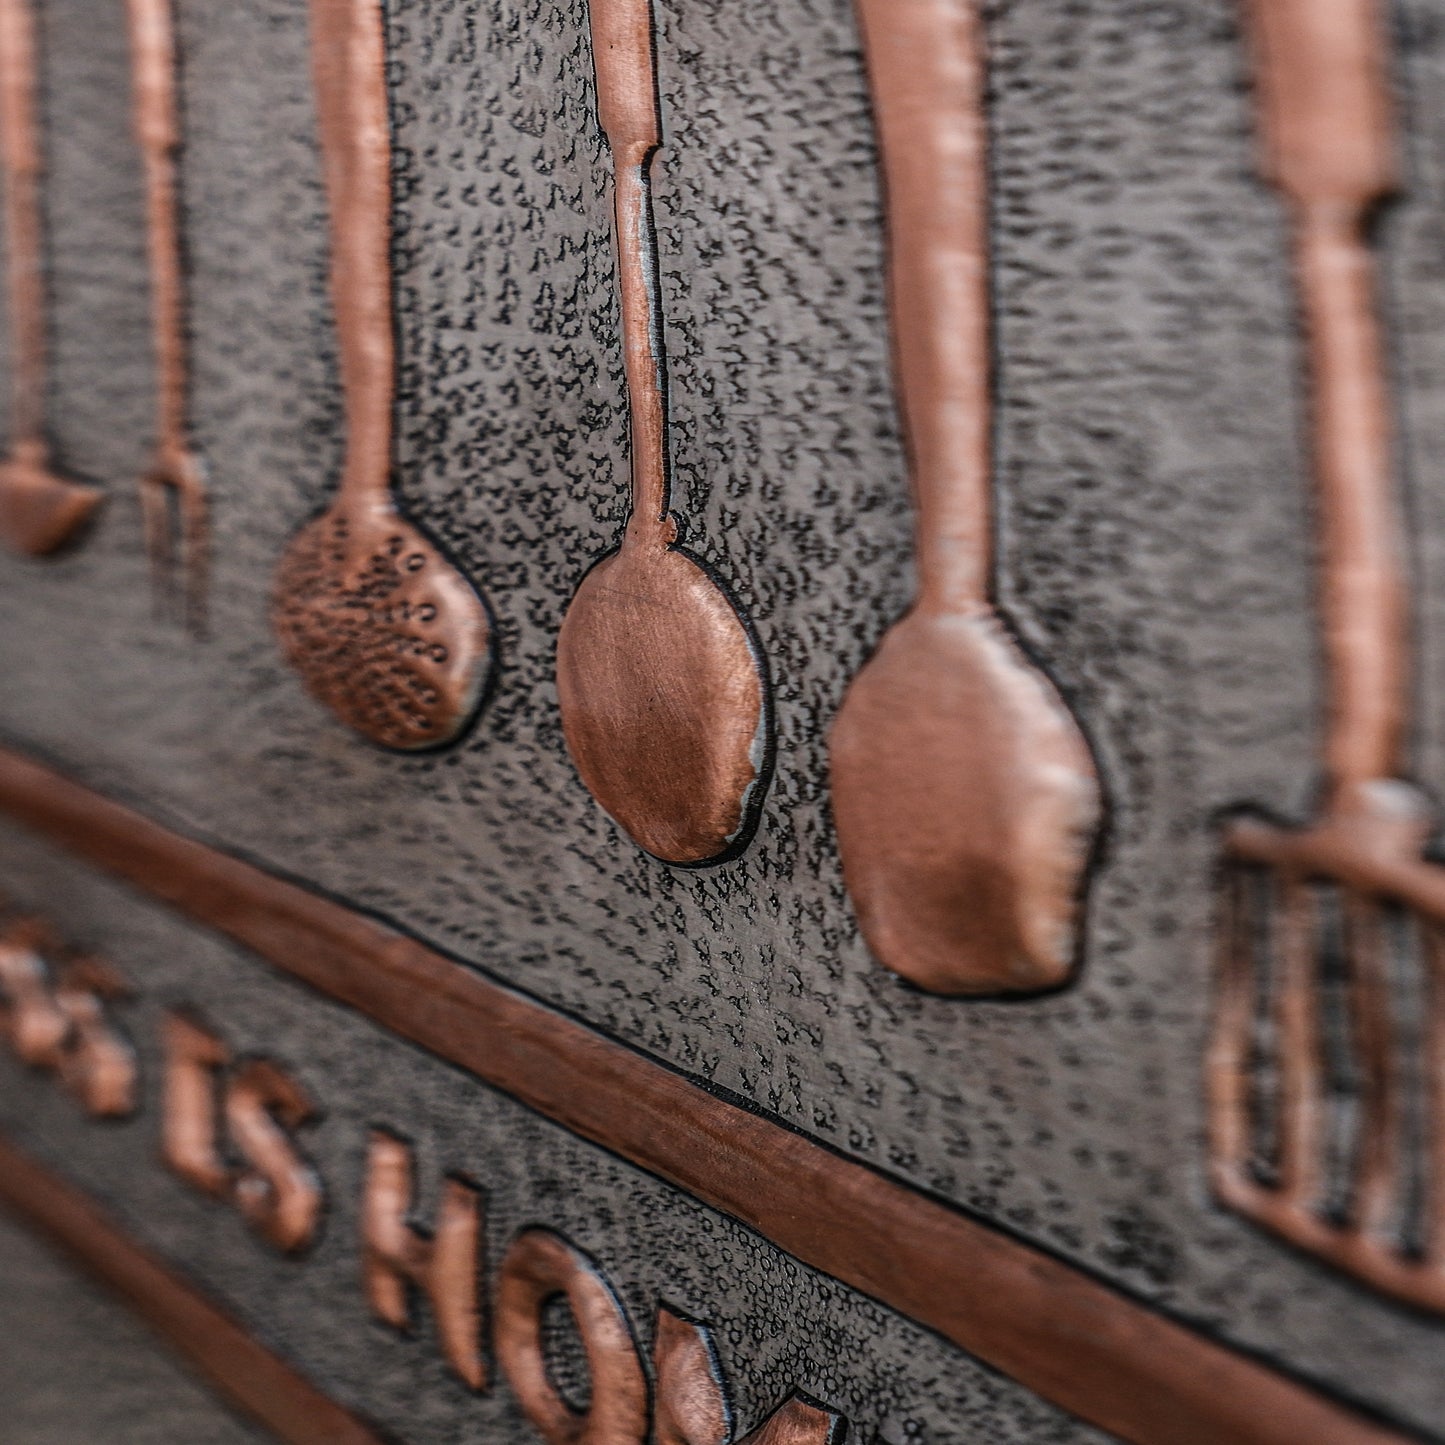 Personalized Copper Backsplash (Kitchen Utensils and Custom Text, Silver&Copper Color)